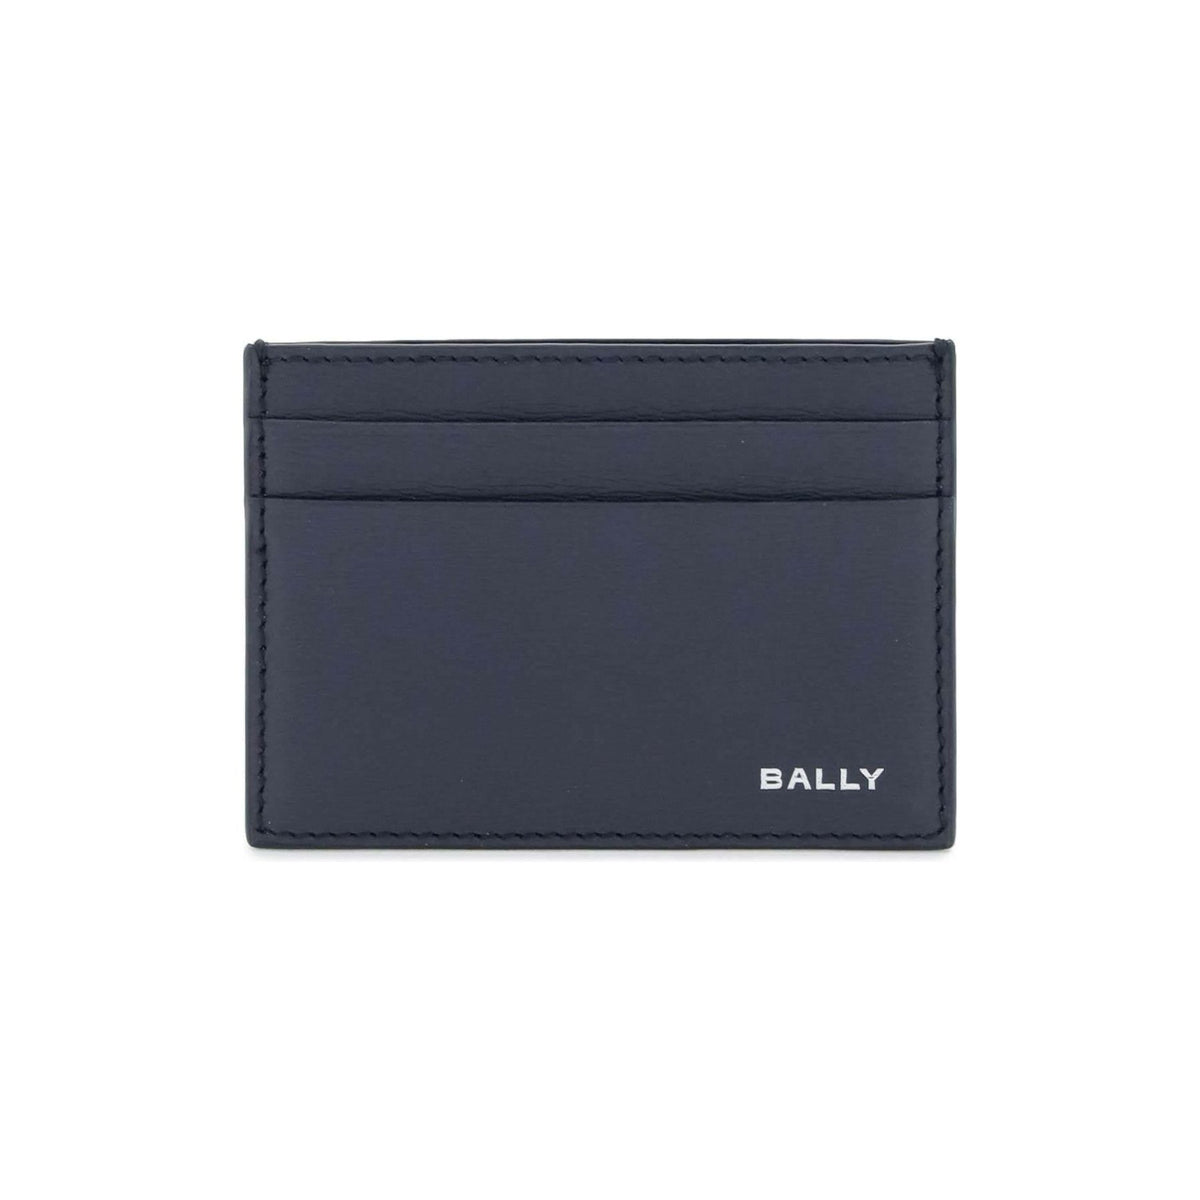 BALLY - Leather Crossing Cardholder - JOHN JULIA